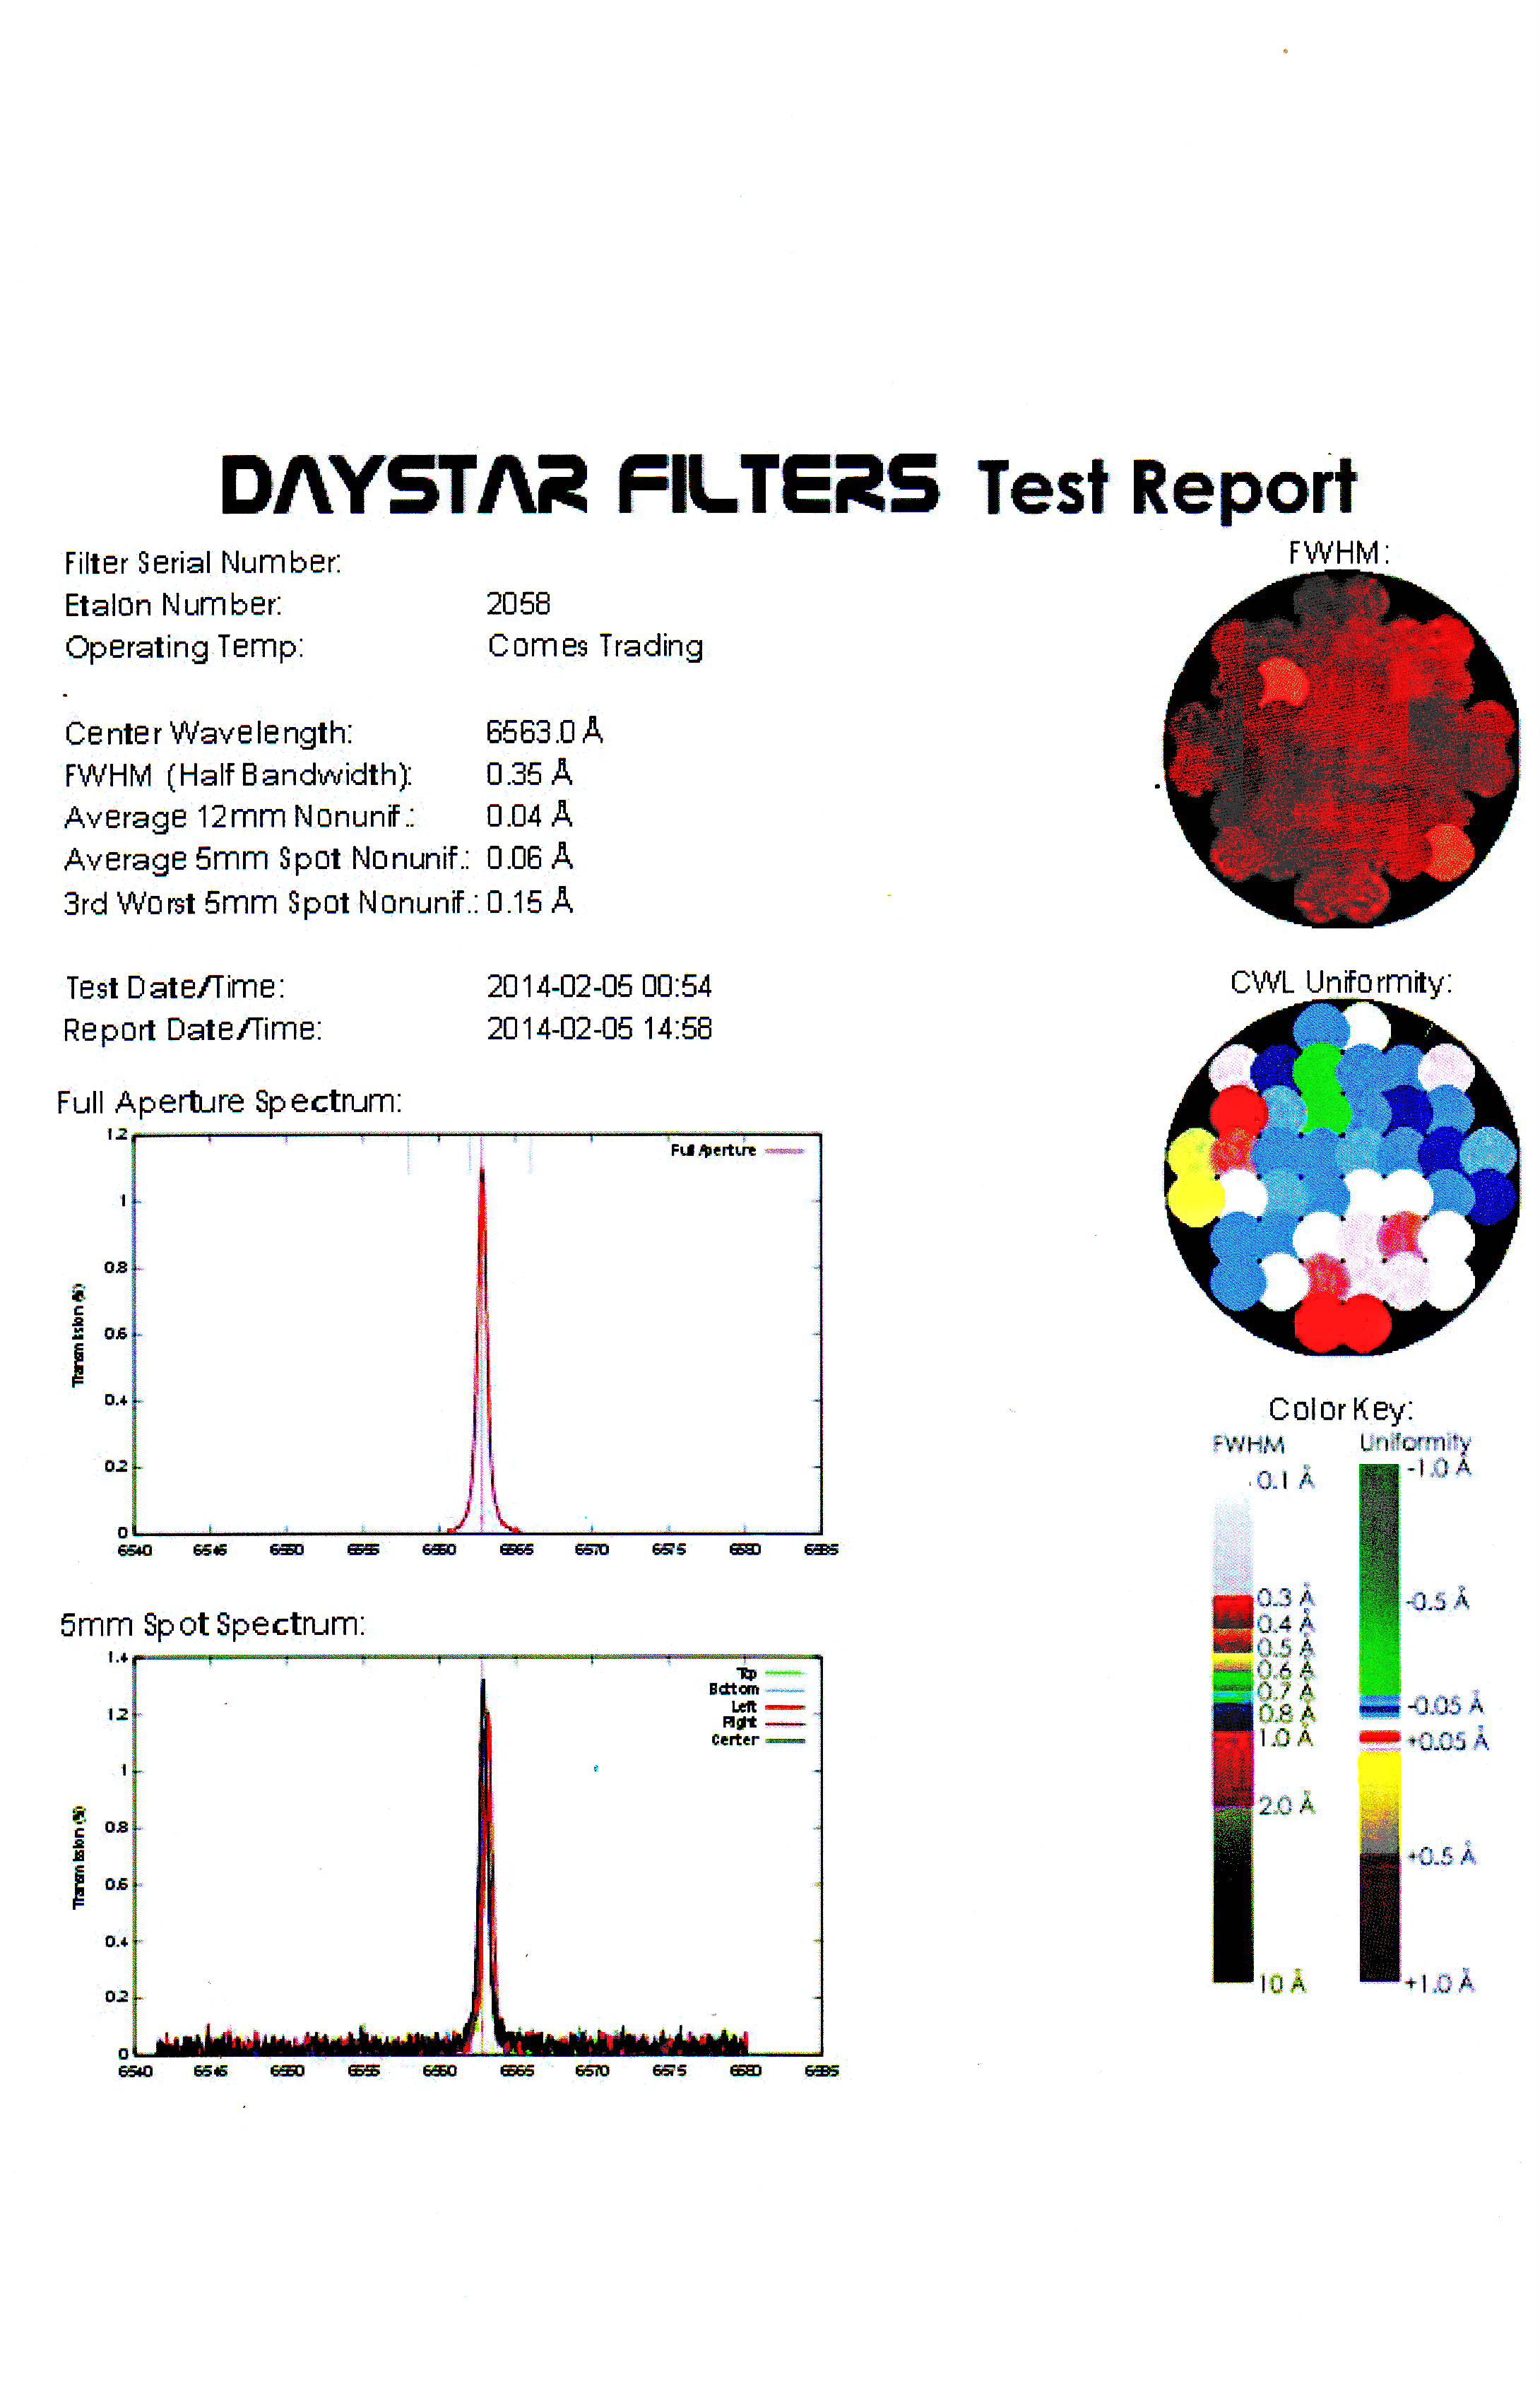 DayStar test report.JPG